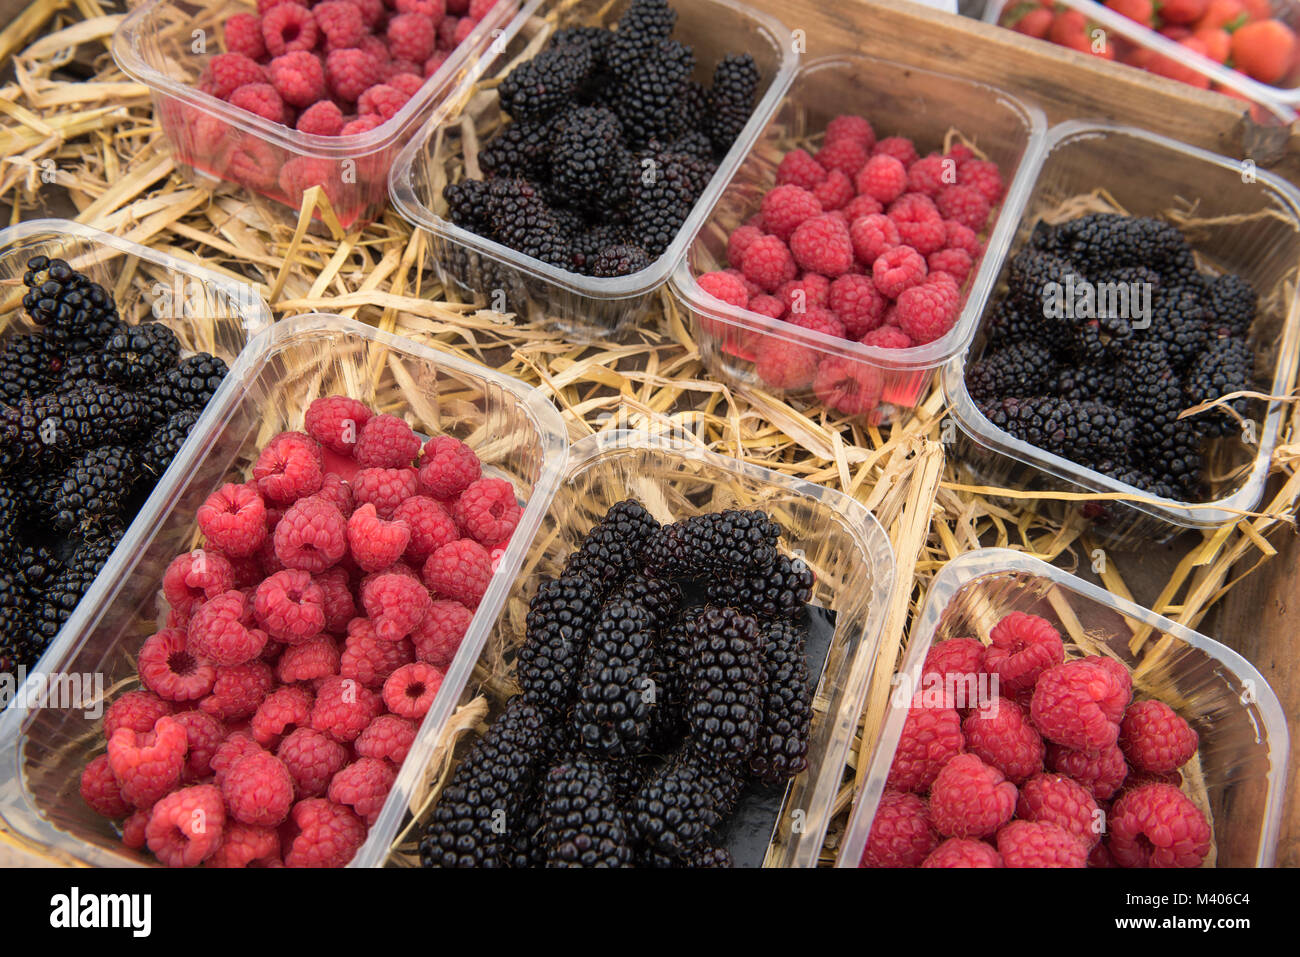 Karaka Blackberries and Raspberries on display at a farmers market in Angus, Scotland. Stock Photo